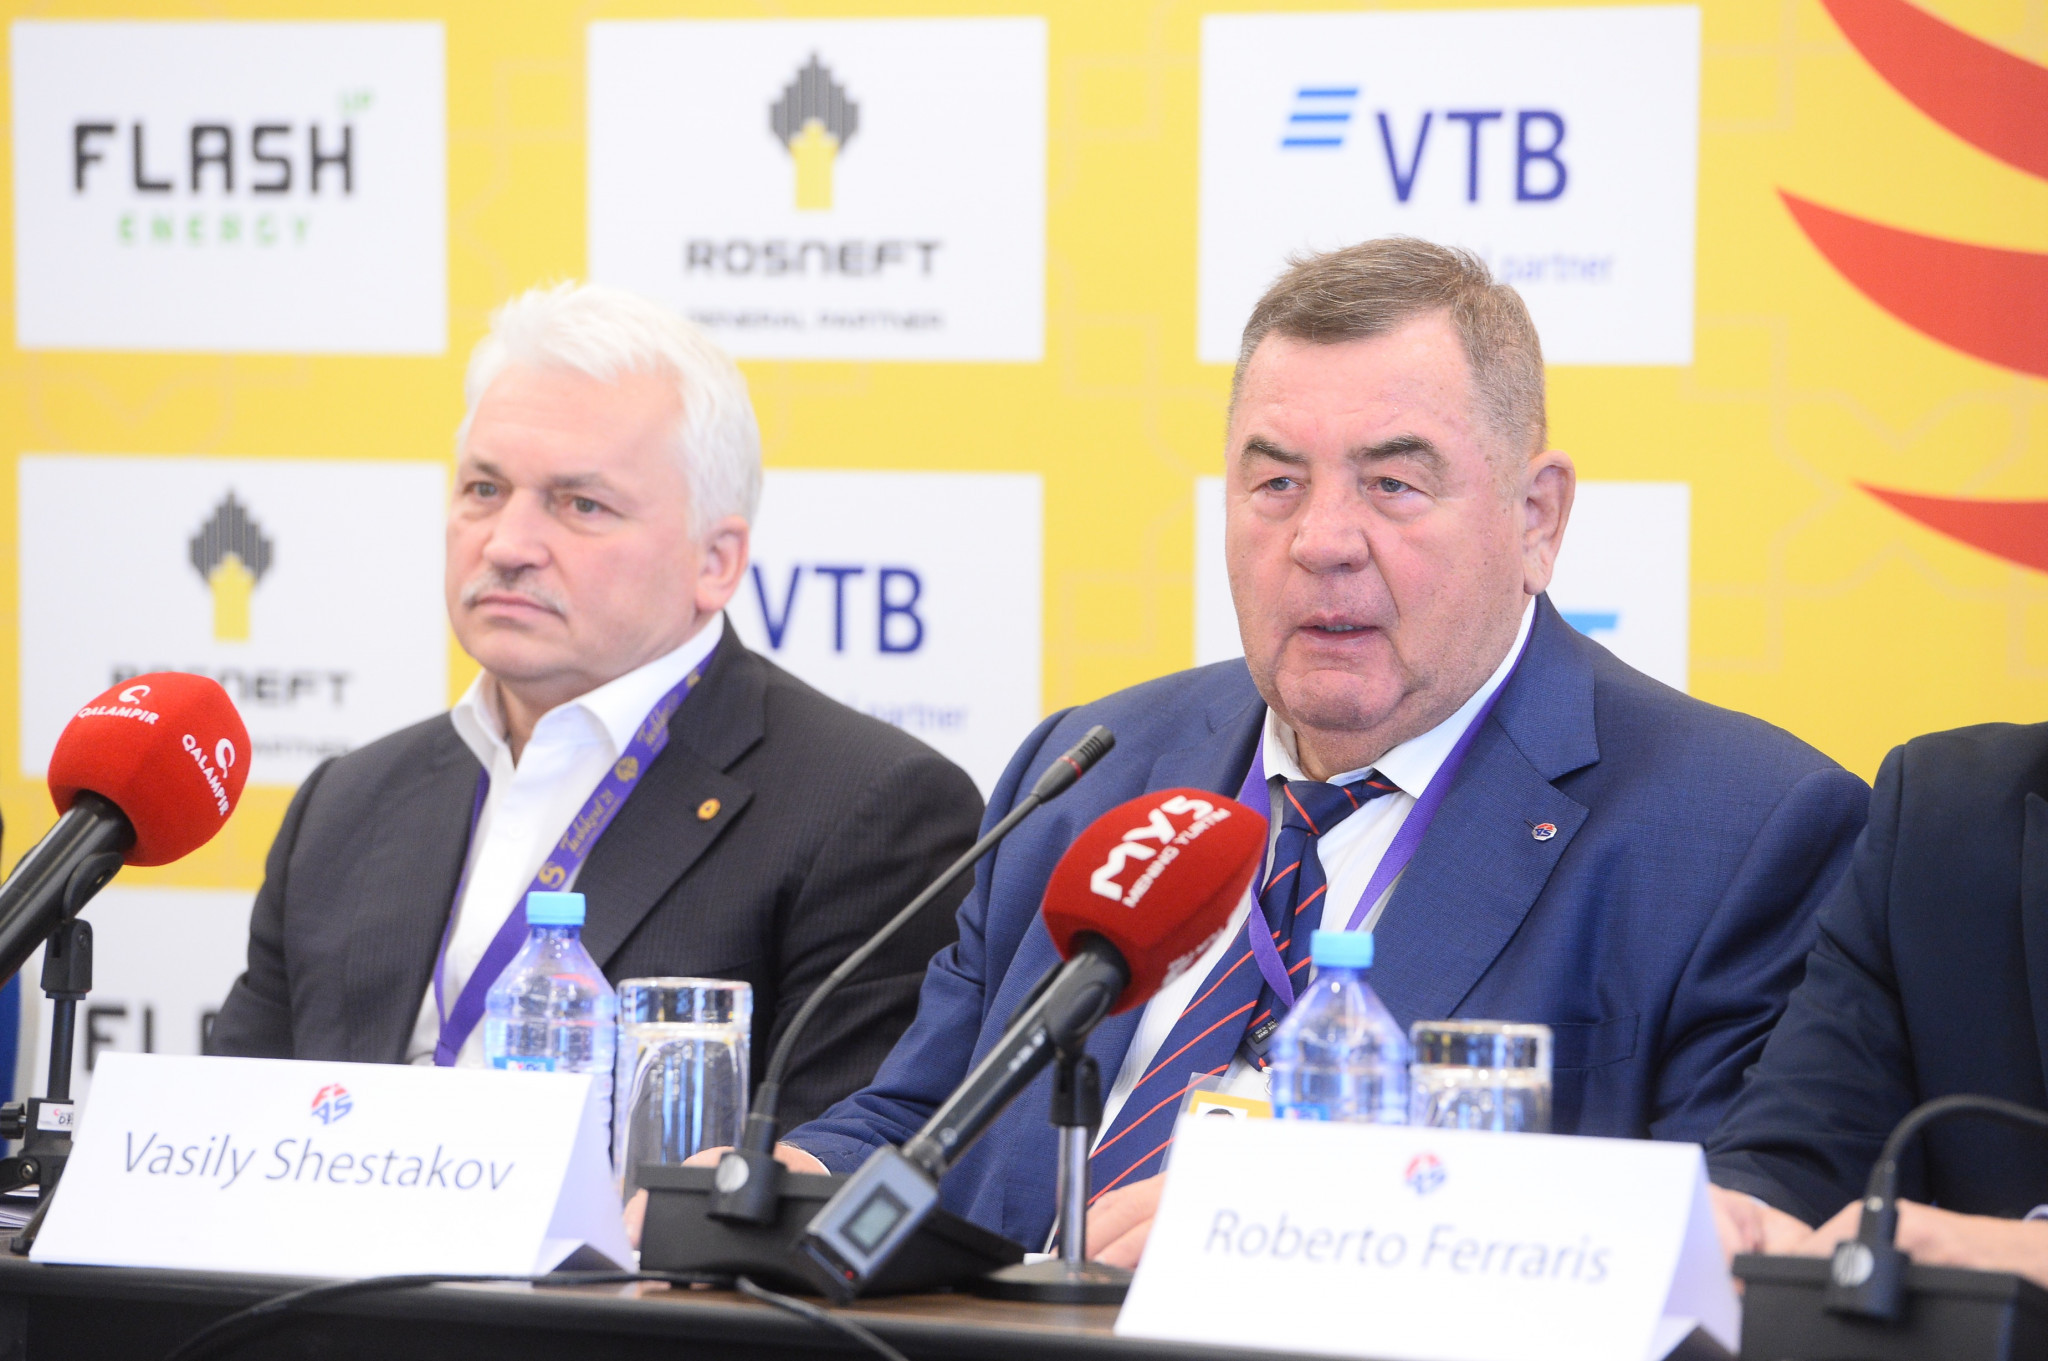 FIAS President Vasily Shestakov has underlined his ambition to put sambo on the Olympic programme ©FIAS